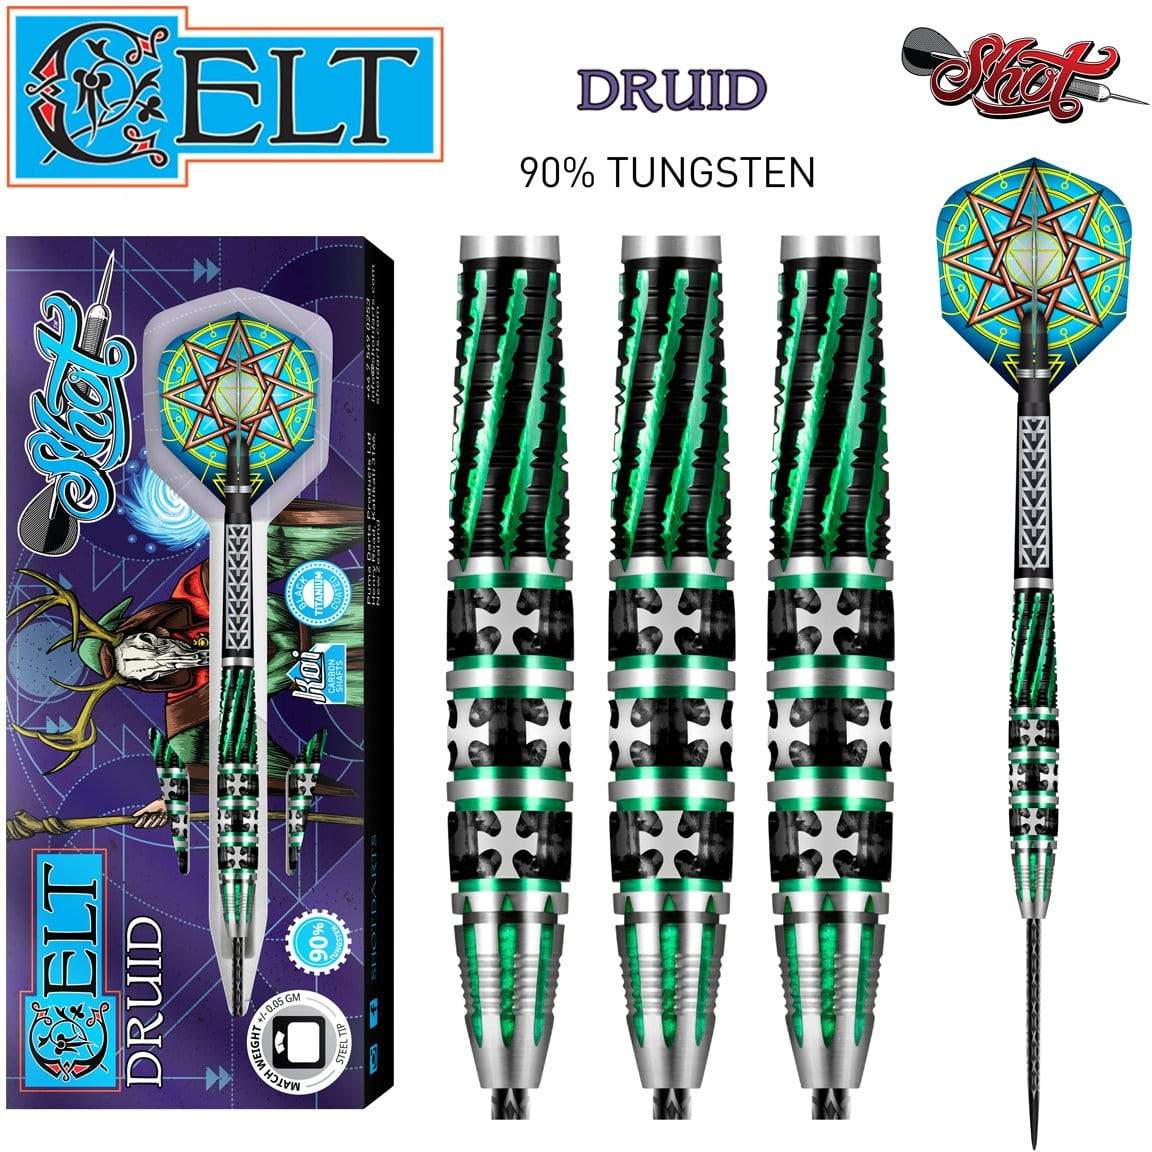 Shot Celt Druid 90% Steel Tip Darts